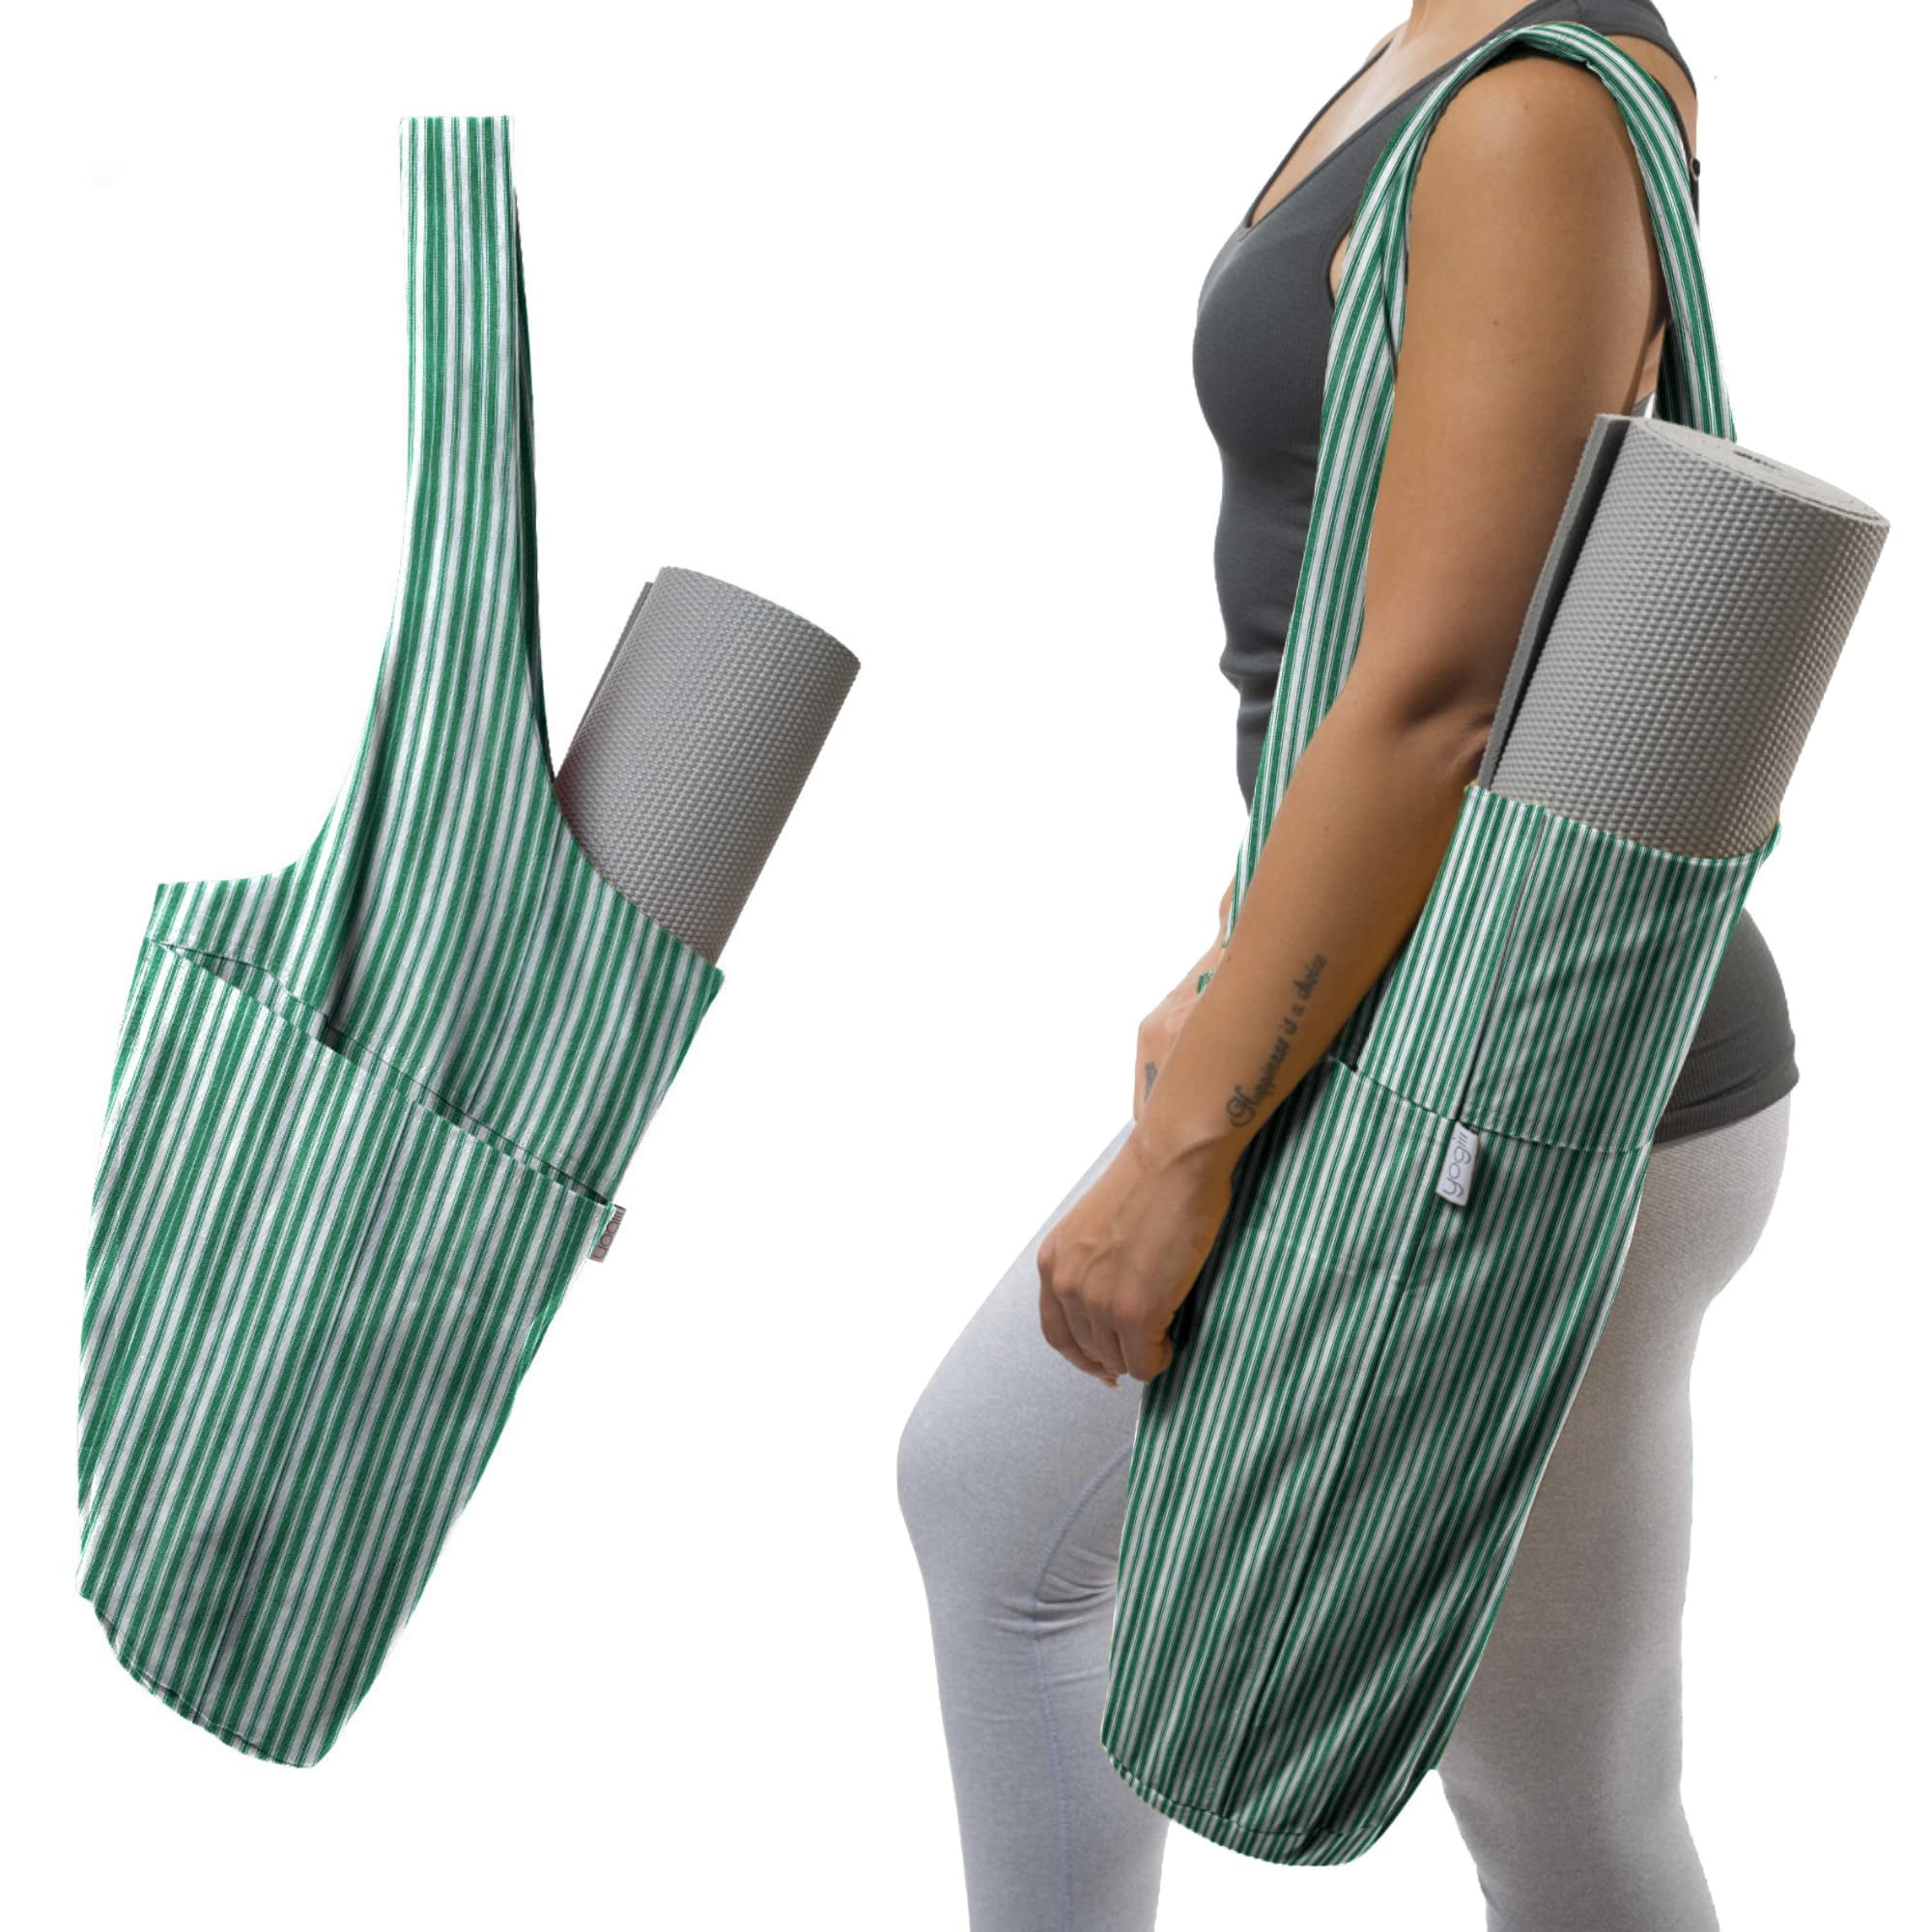 Yogwise Yoga Mat Bag| Yoga Mat cover| Yoga Mat Holder - Army Green